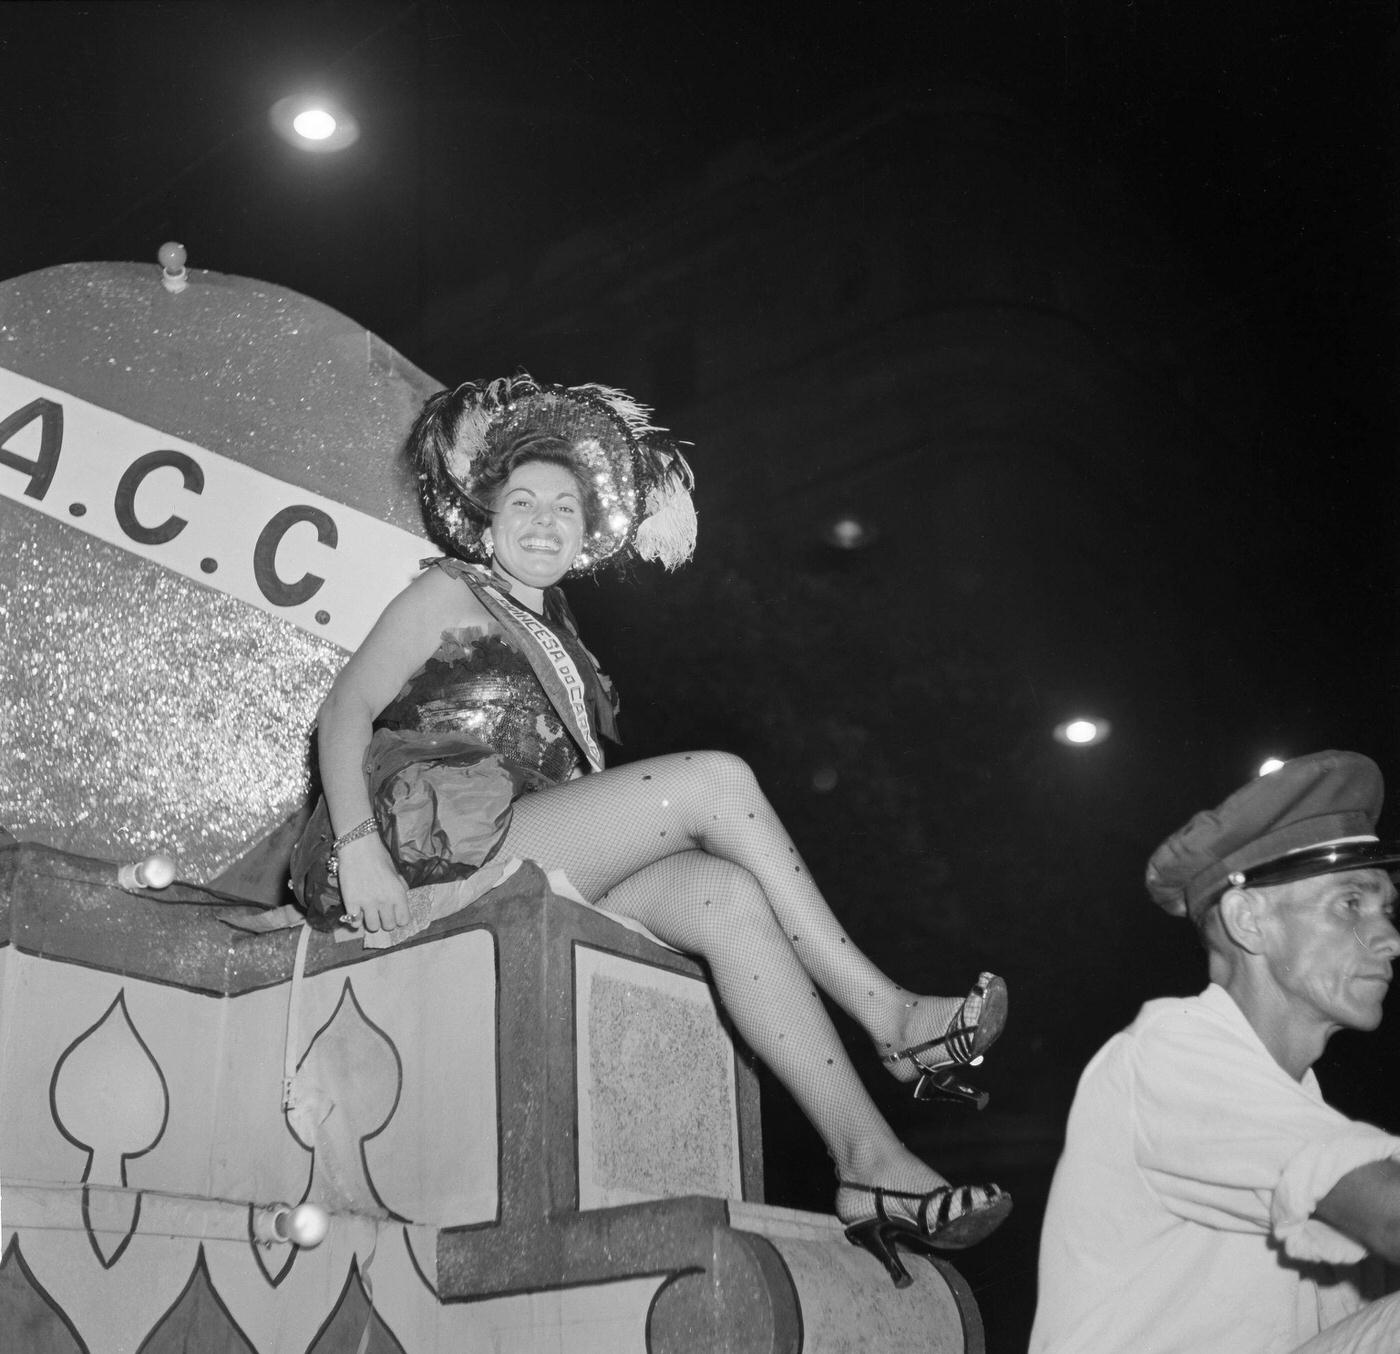 Parade Float Revelers, Rio Carnival 1953